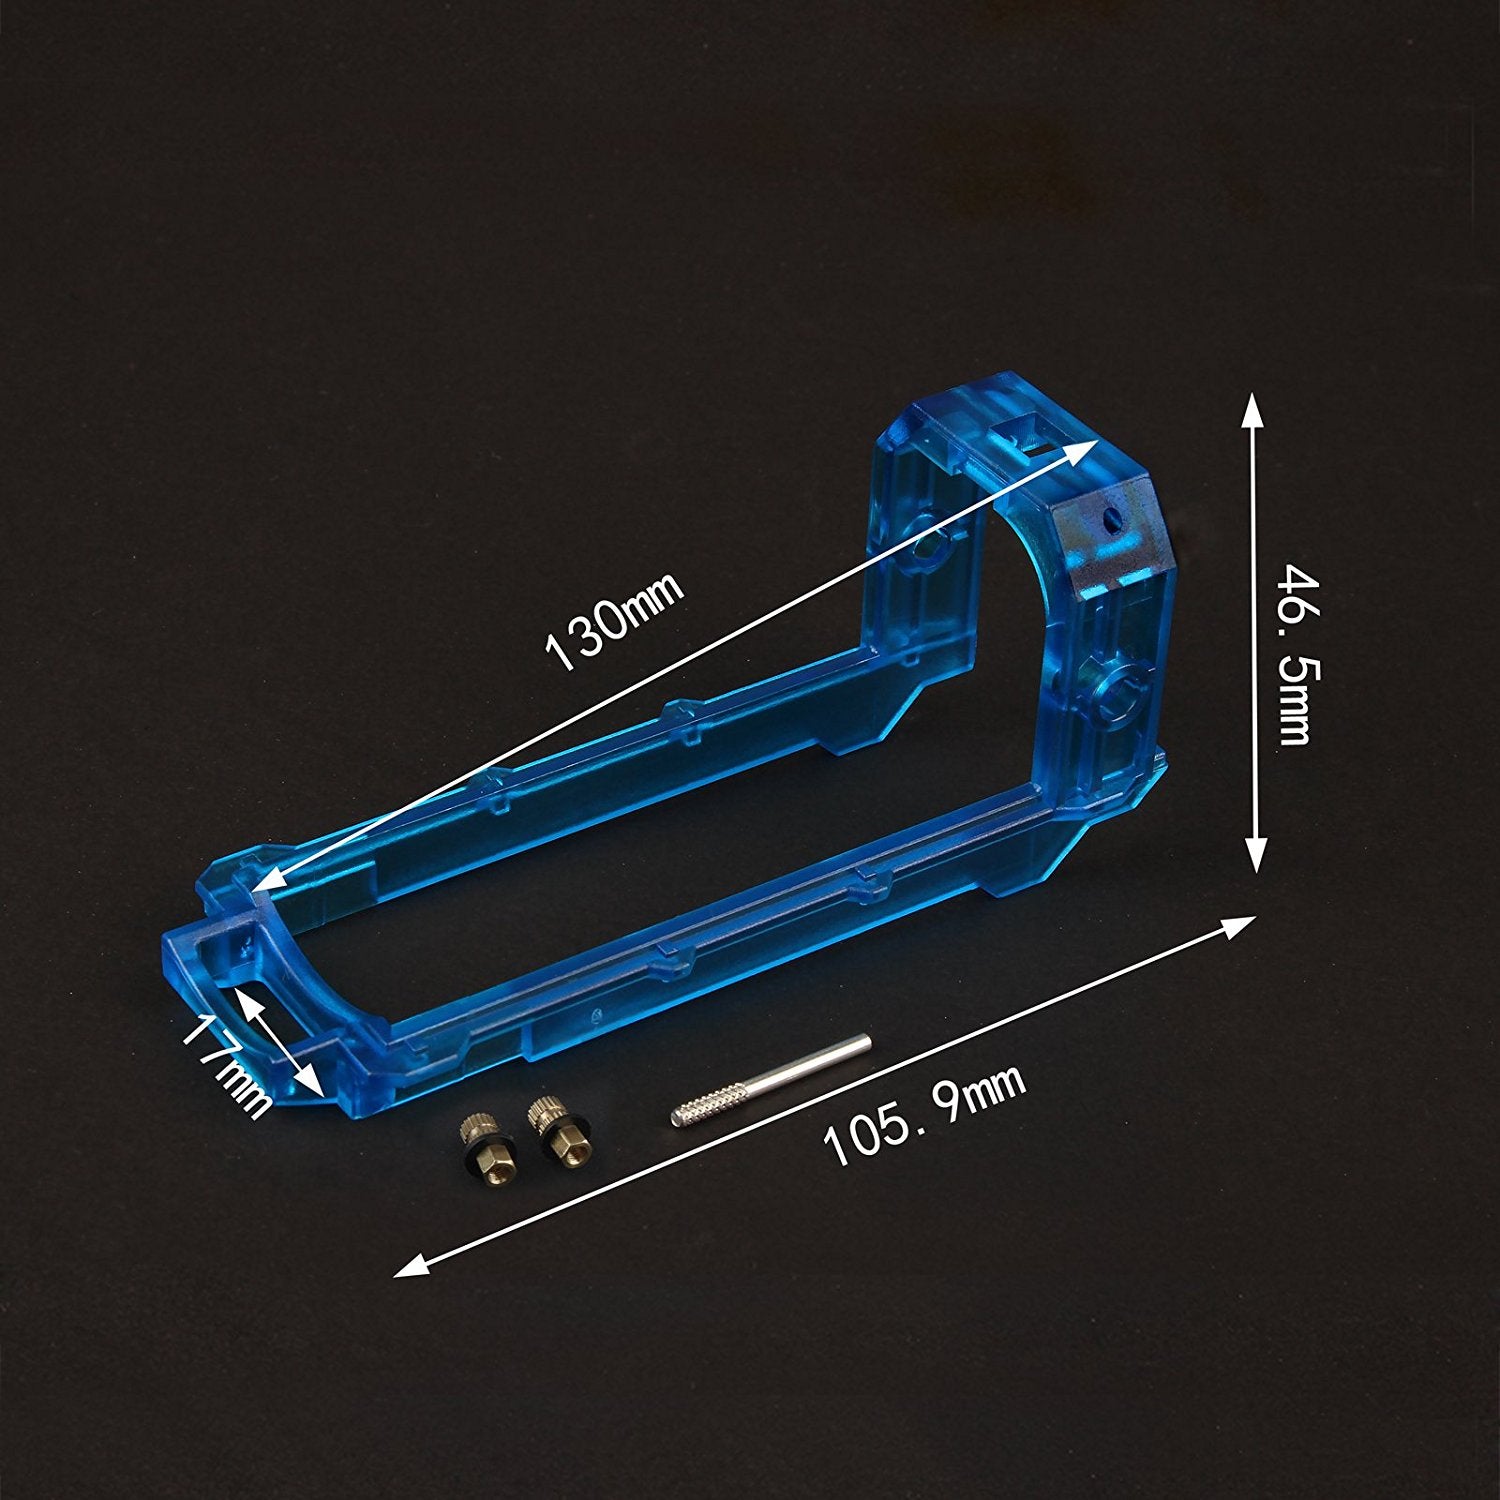 Worker Prophecy Type-R Model B Long 7.2cm Dart DIY Kits for Nerf Retaliator Color Blue Transparent - BlasterMOD